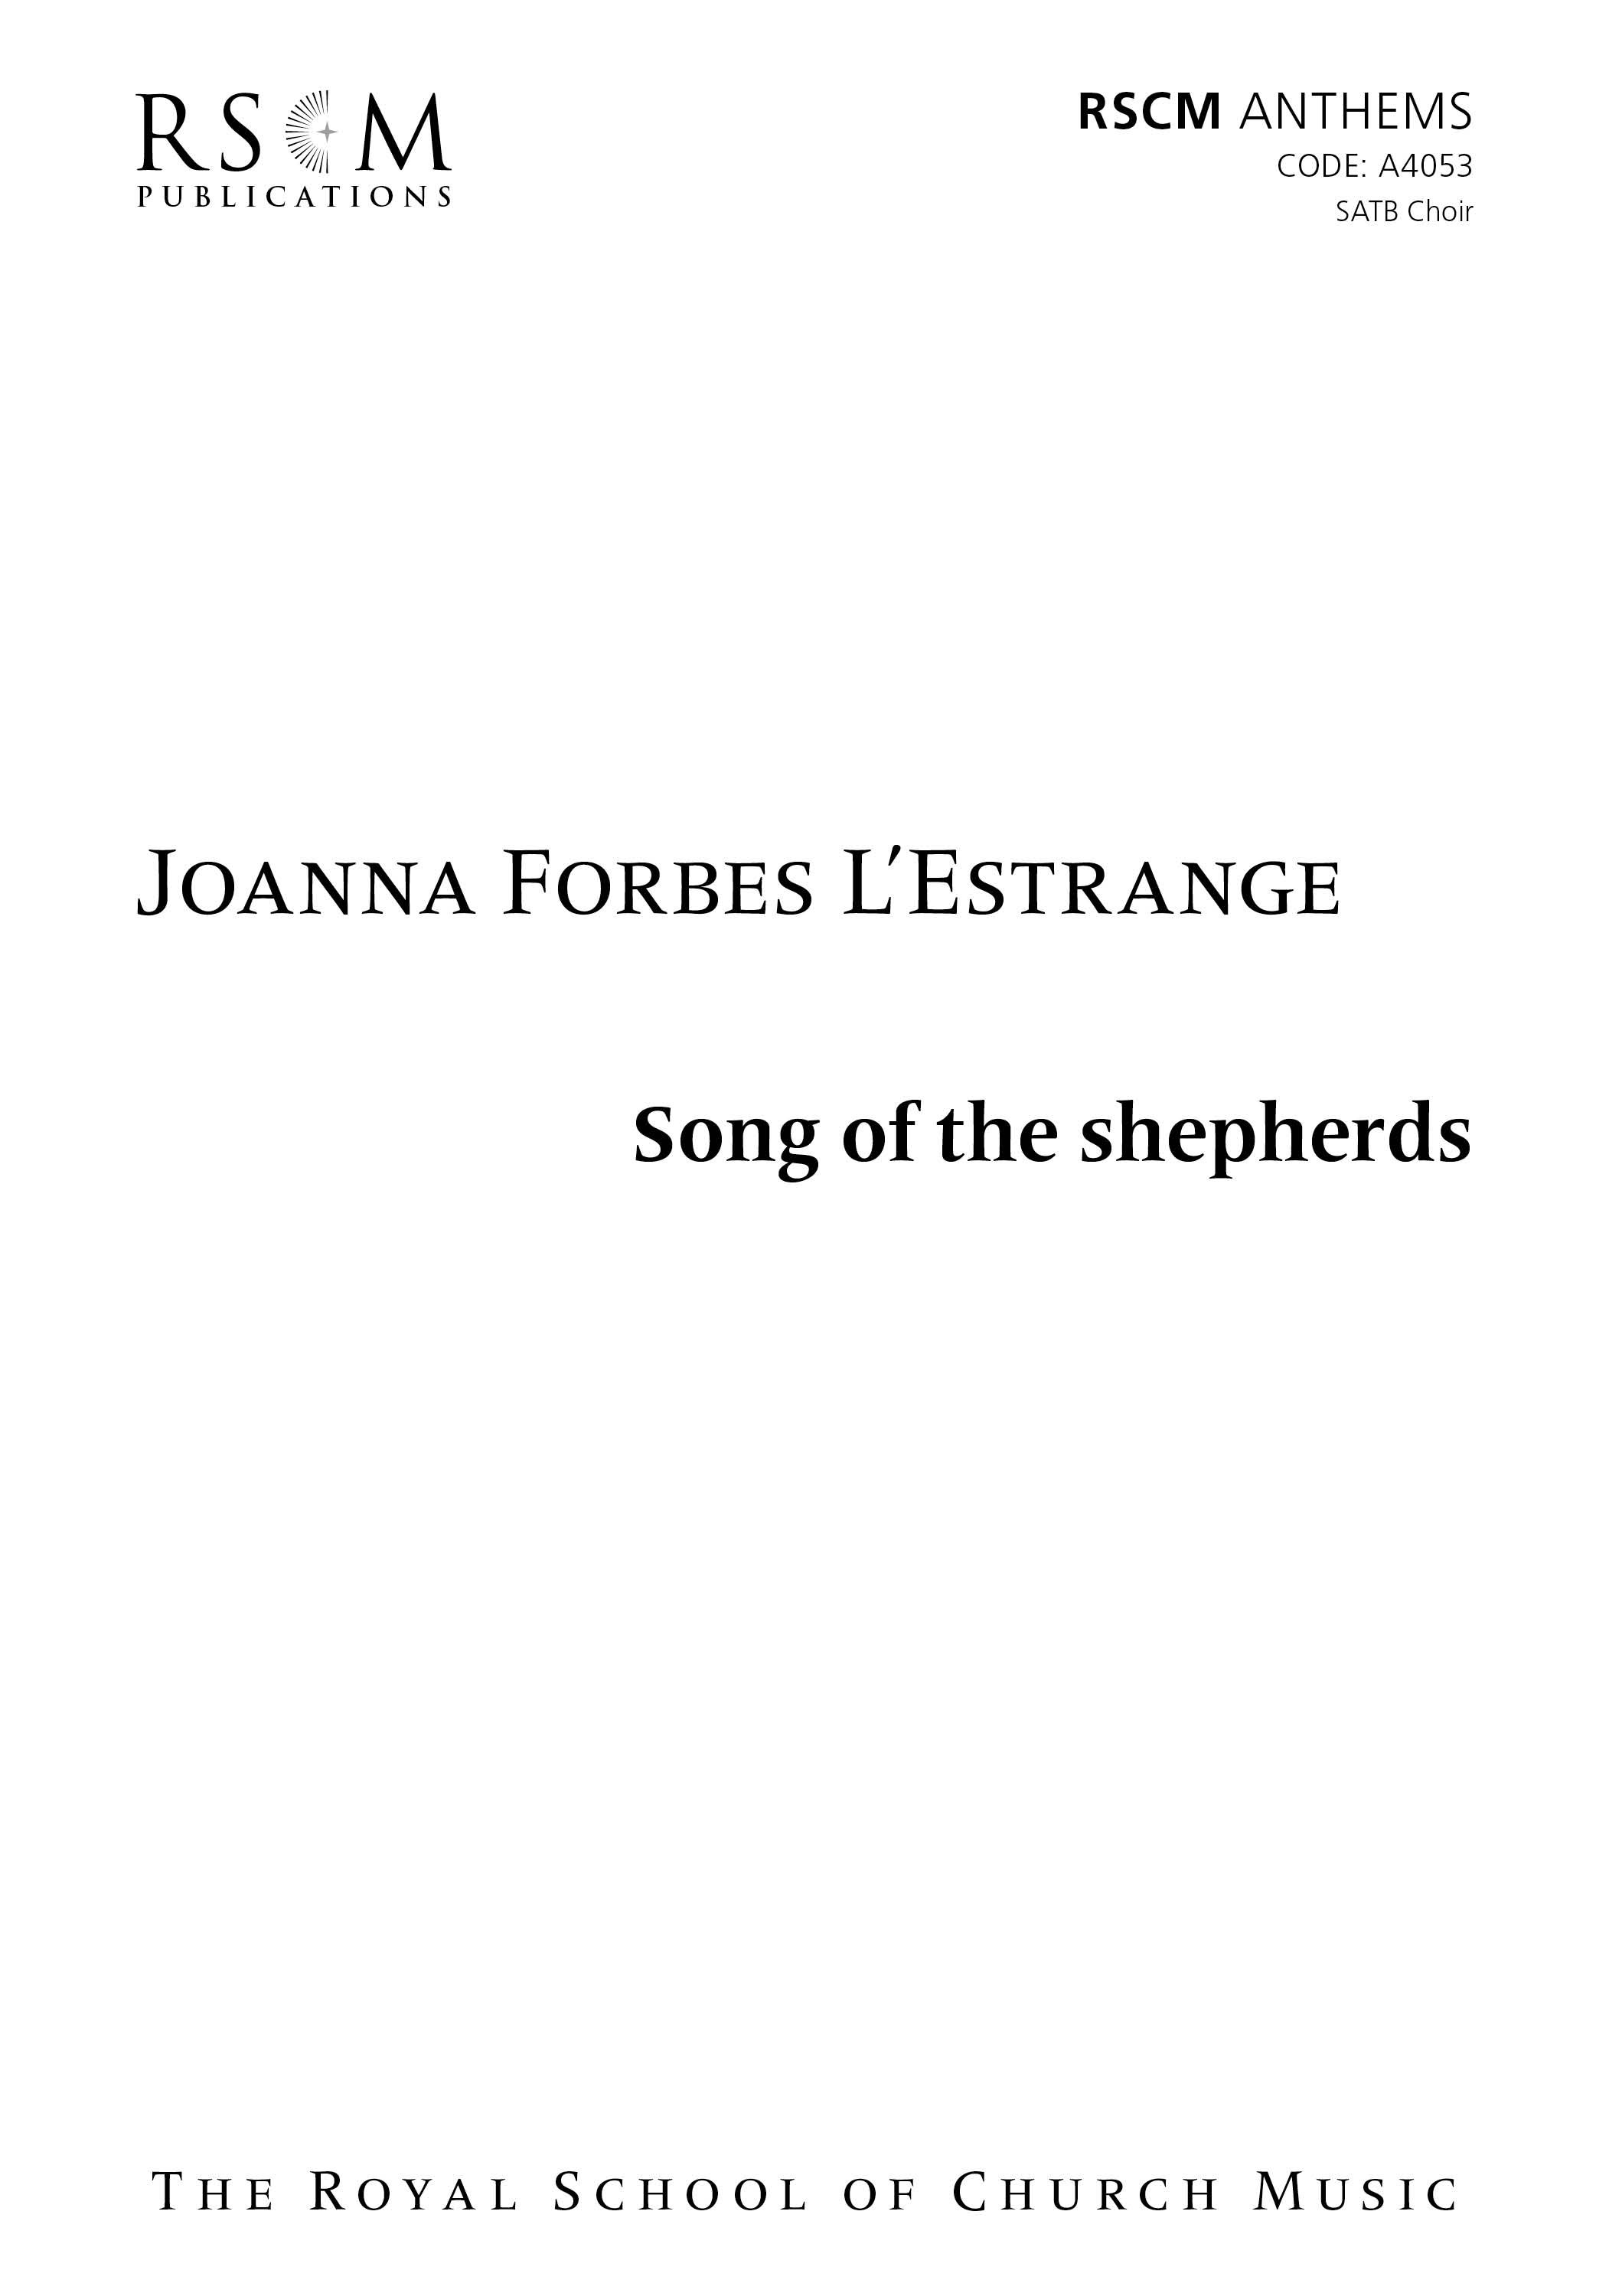 A4053 Forbes L'Estrange Song of the shepherds.jpg